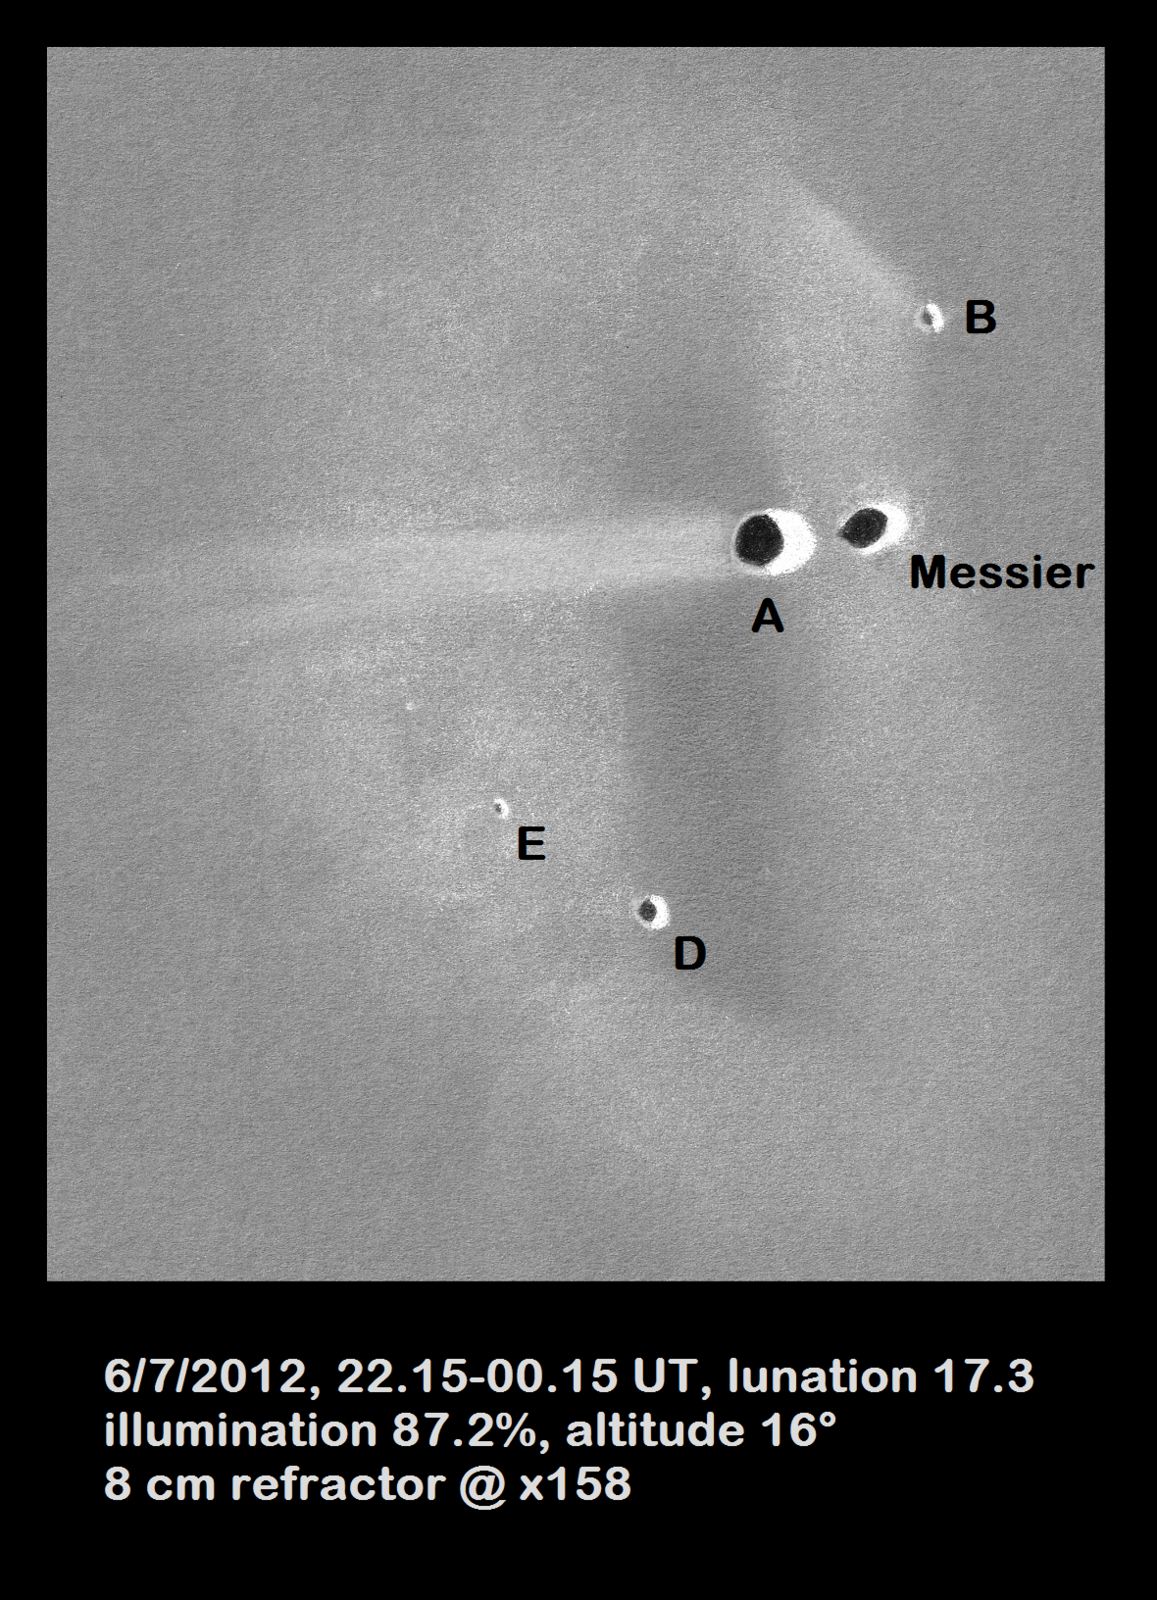 Lunar 025: Messier & Messier A (oblique ricochet-impact pair)